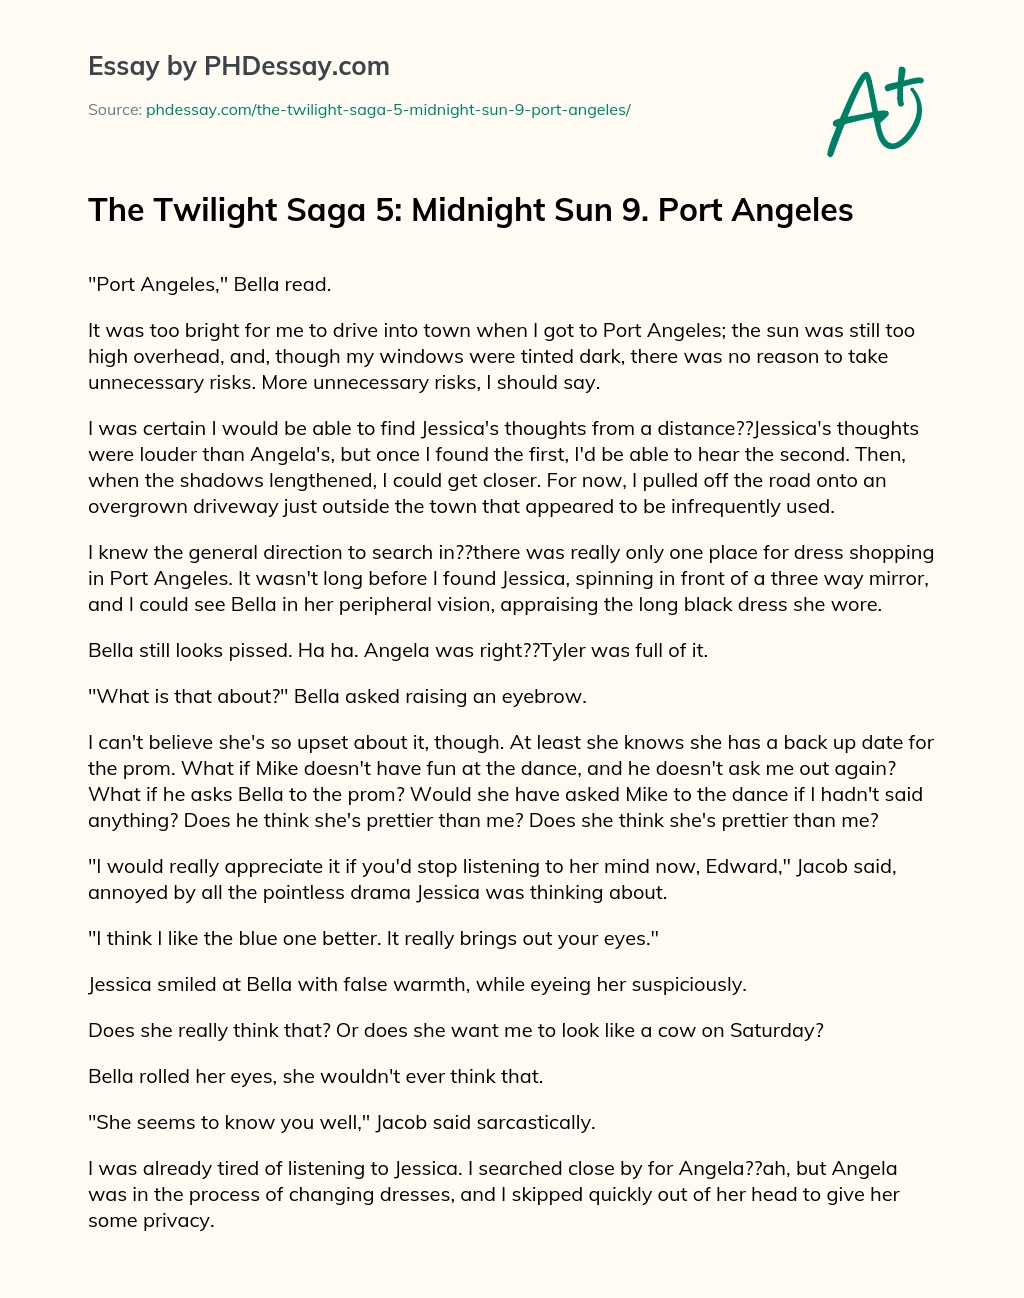 The Twilight Saga 5: Midnight Sun 9. Port Angeles essay